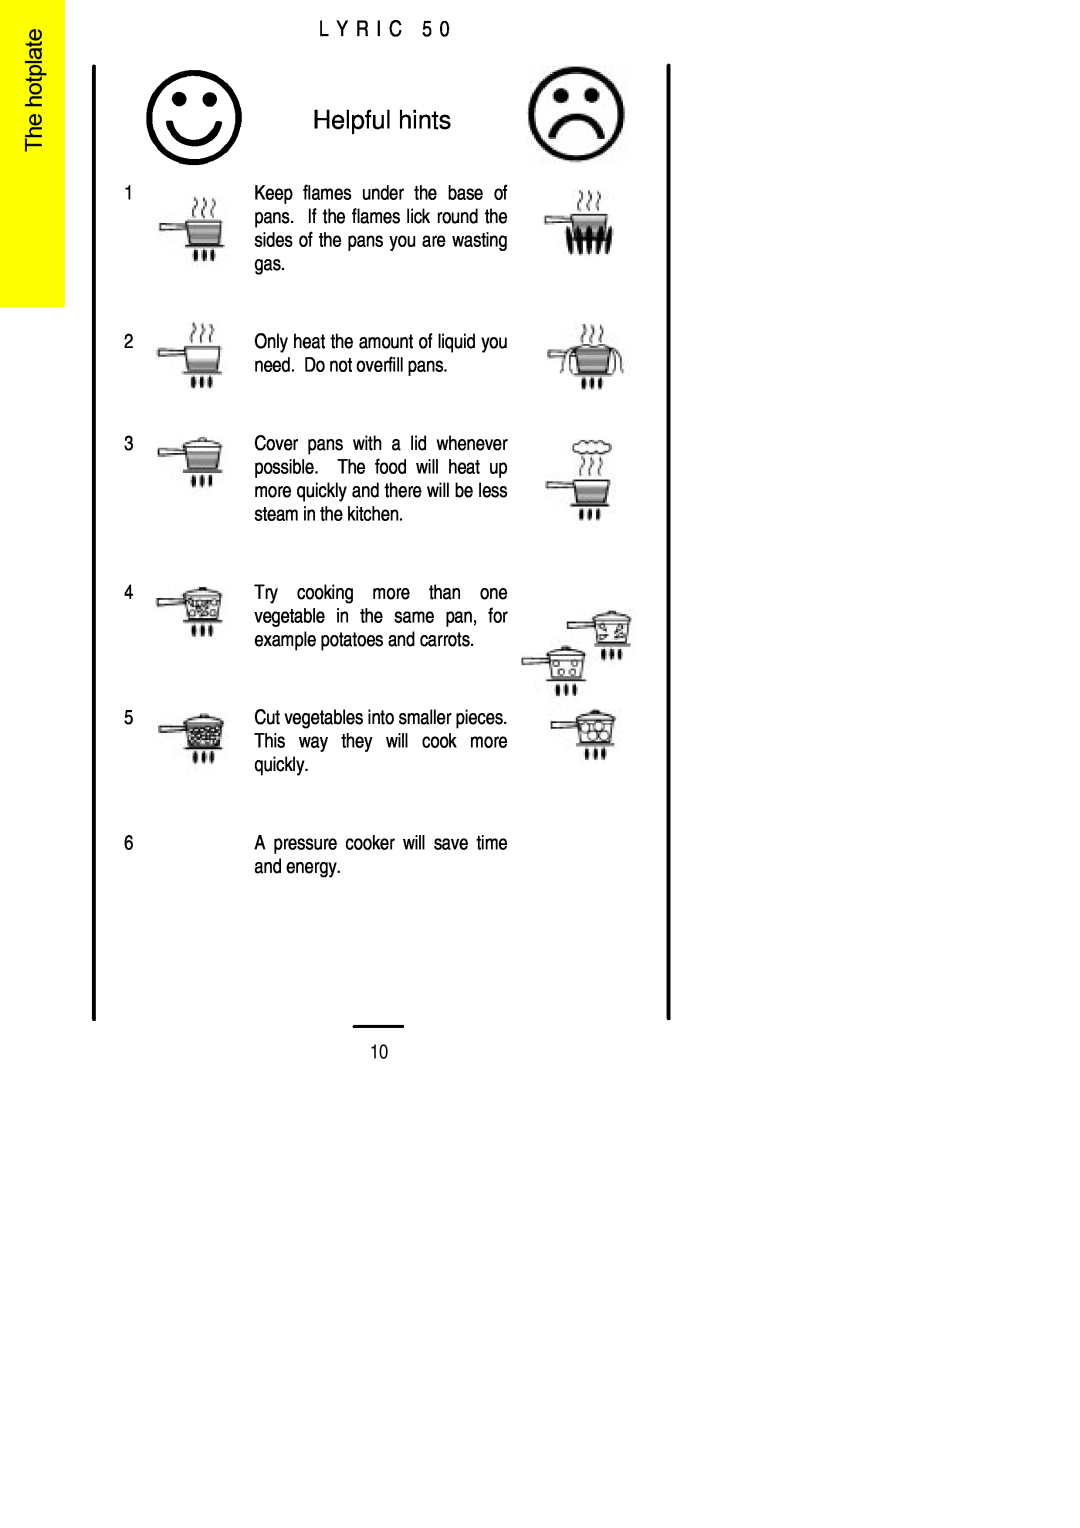 Electrolux Lynic 50 installation instructions Helpful hints, oheT, L Y R I C 